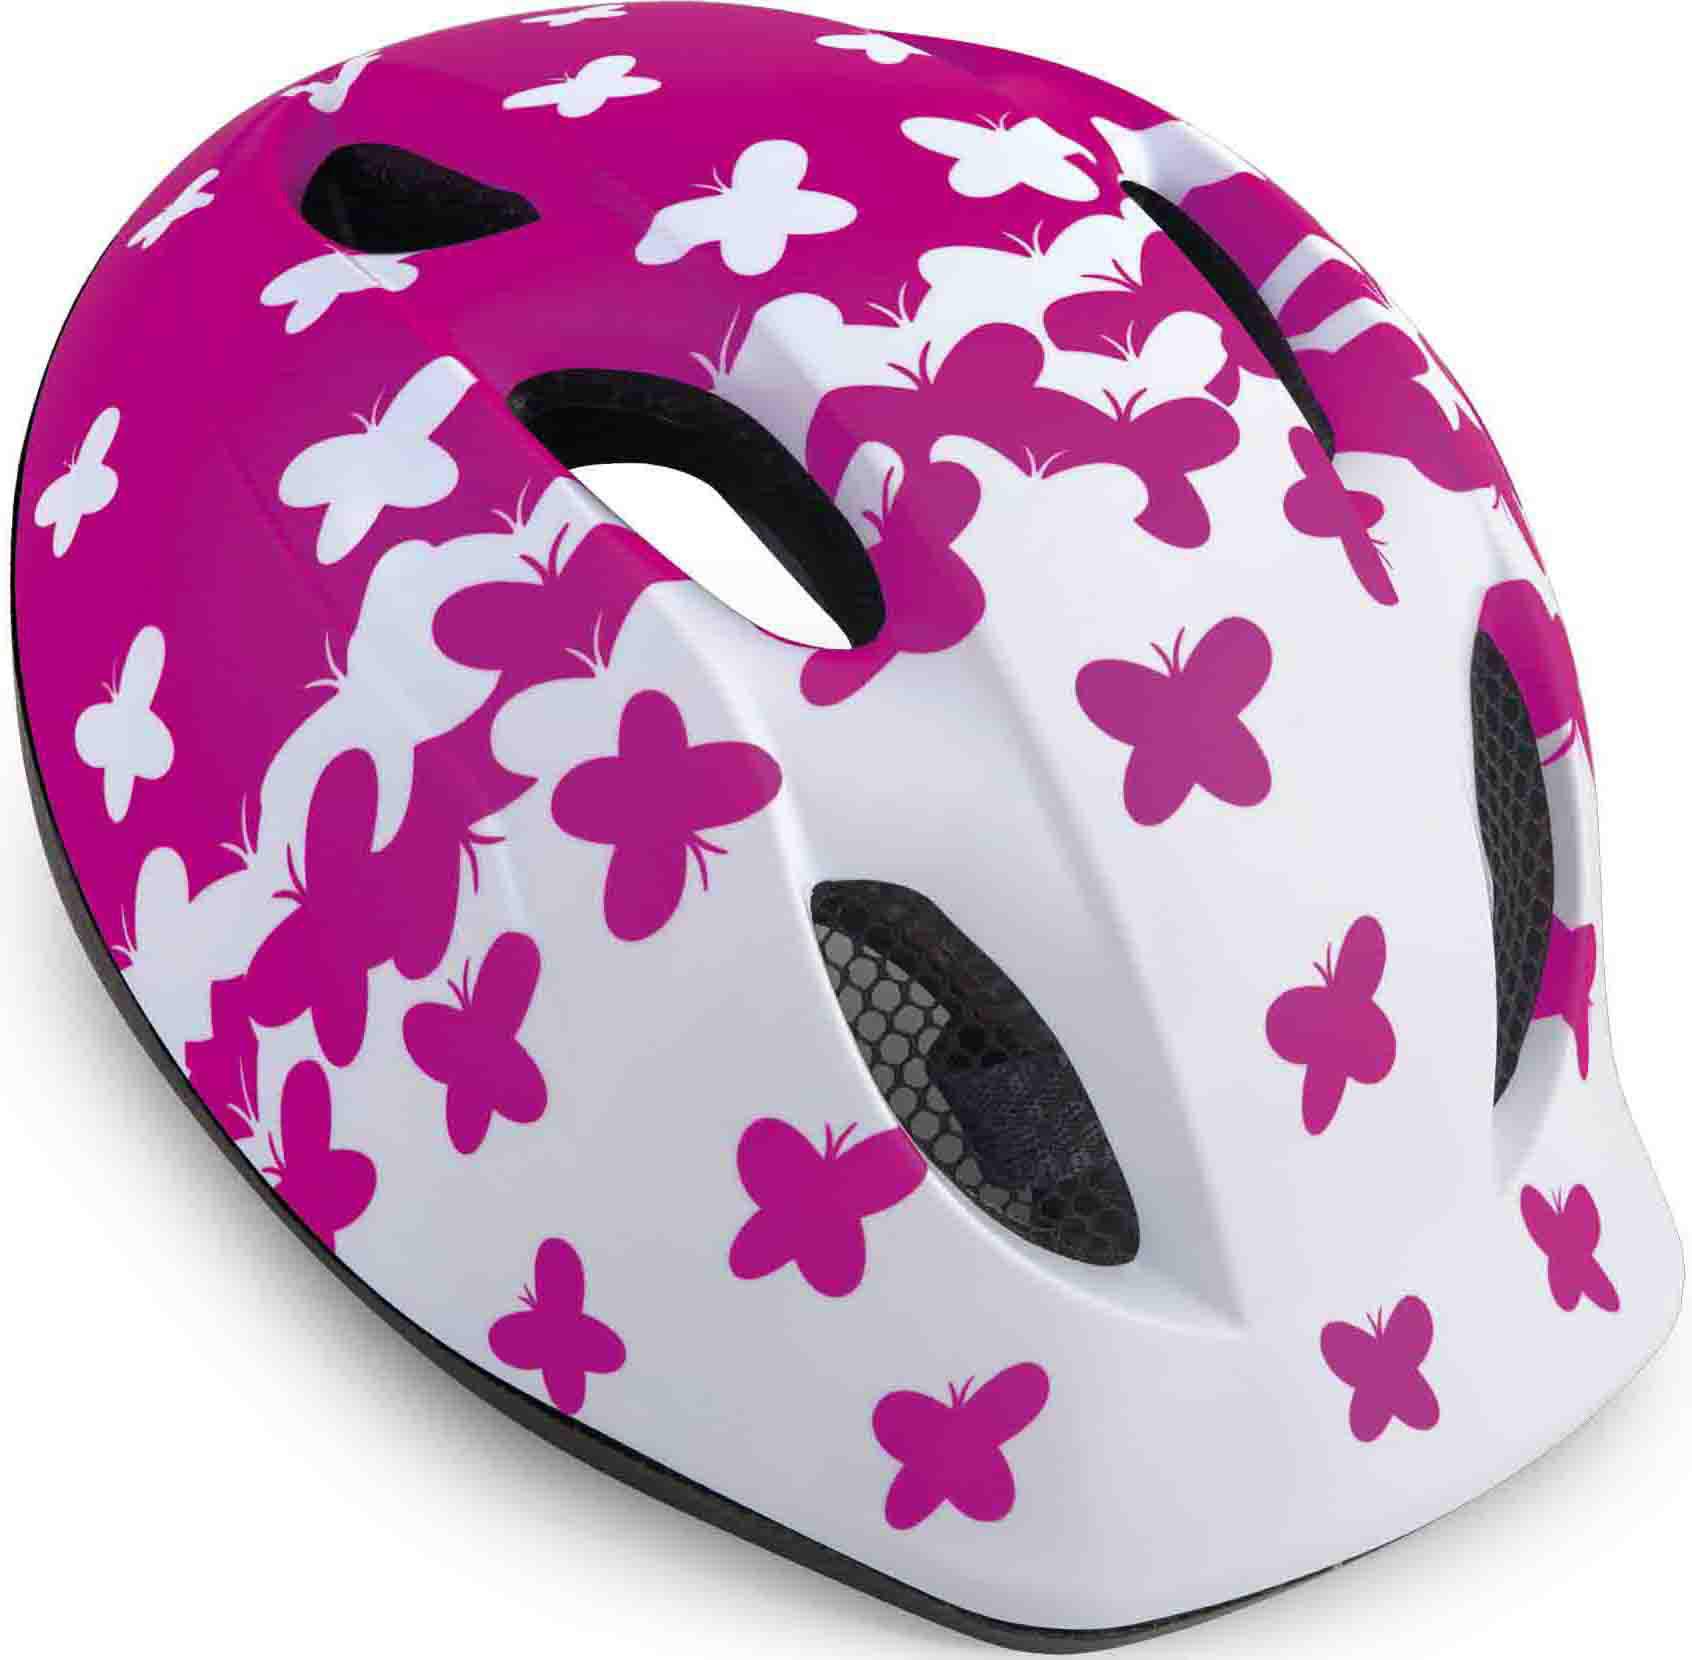 Met Super Buddy Kids Helmet White Pink Butterfly 52-56Cm